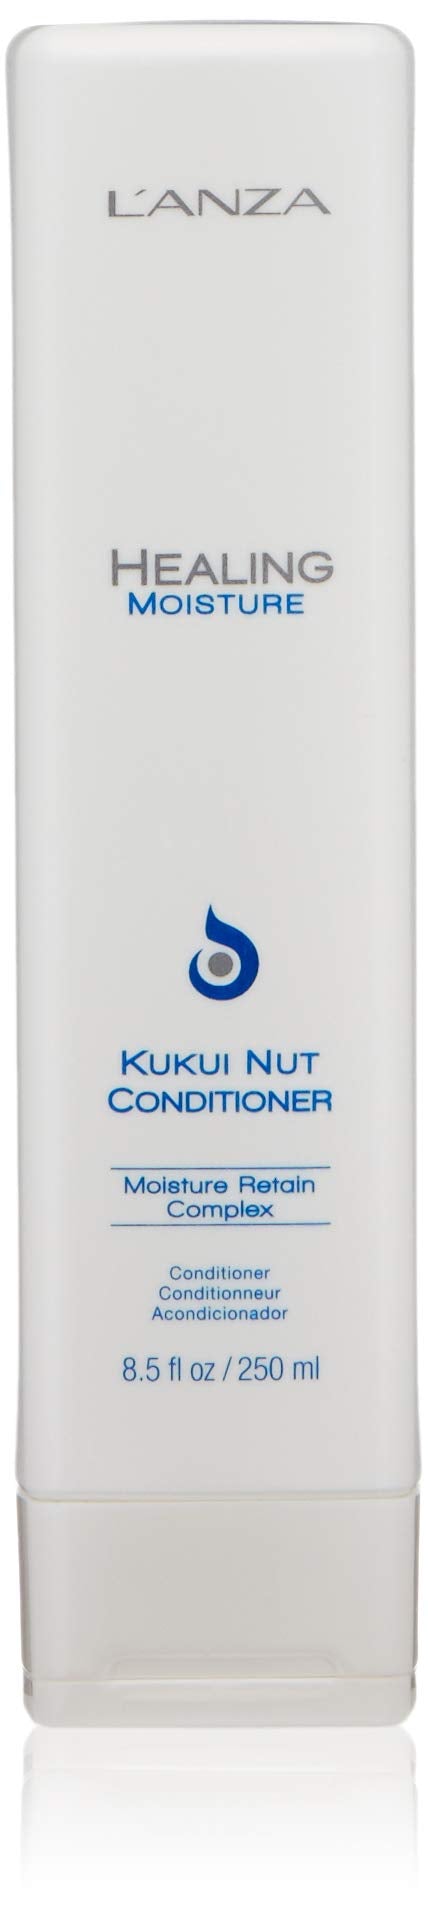 [Australia] - L'ANZA Healing Moisture by Kukui Nut Conditioner 250ml 